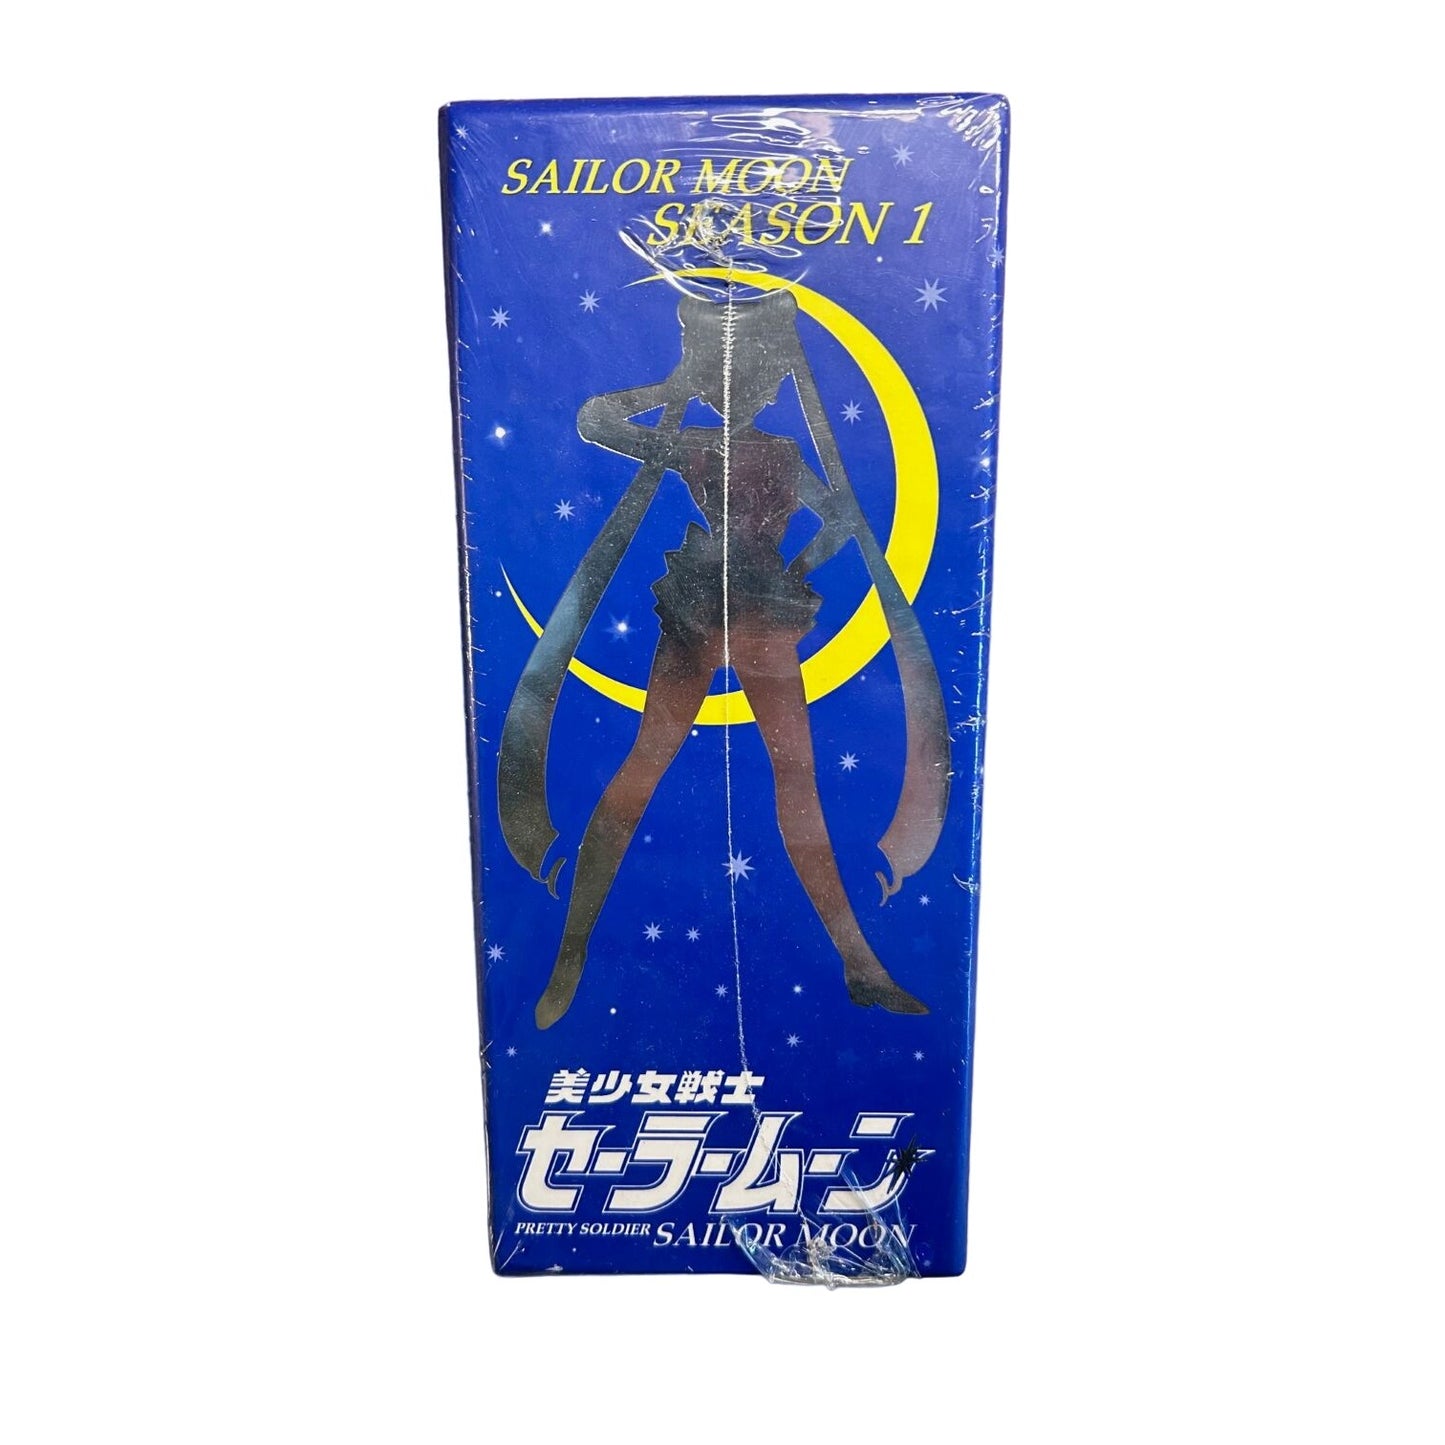 Sailor Moon Season One Uncut - BRAND NEW - Anime DVD - ADV Films 2003